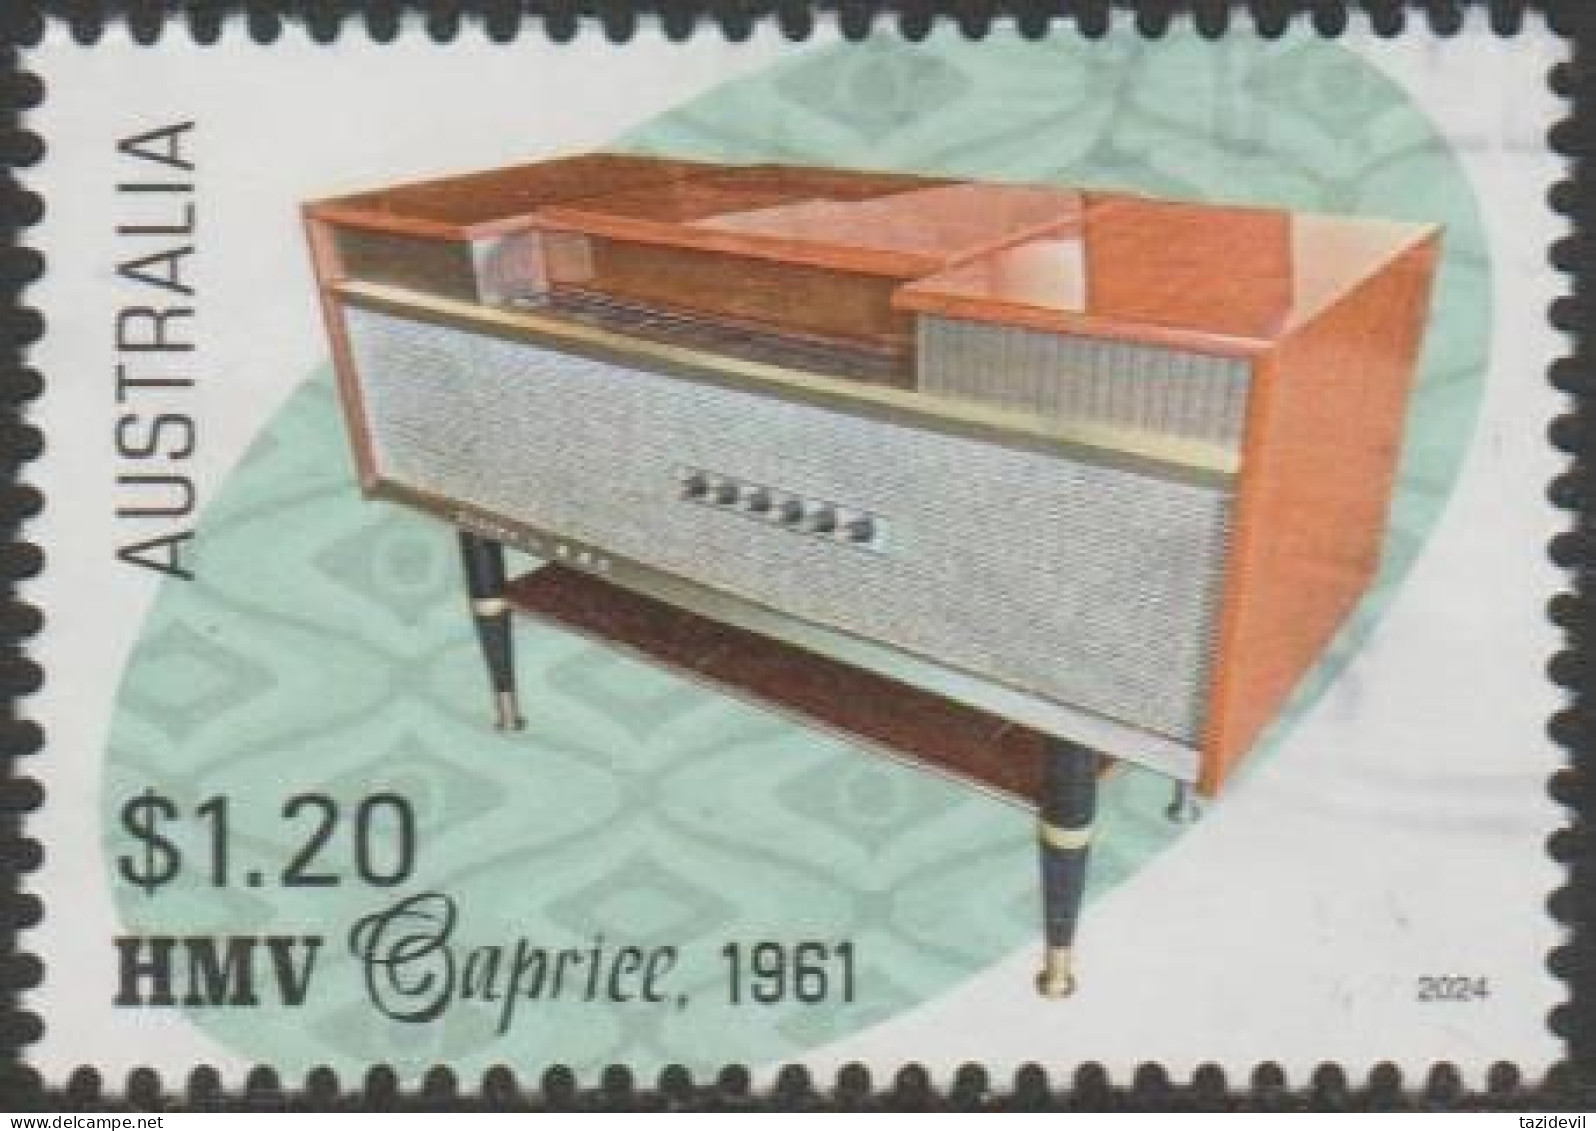 AUSTRALIA - USED 2024 $1.20 Retro Radio - HMV Caprice 1961 - Used Stamps